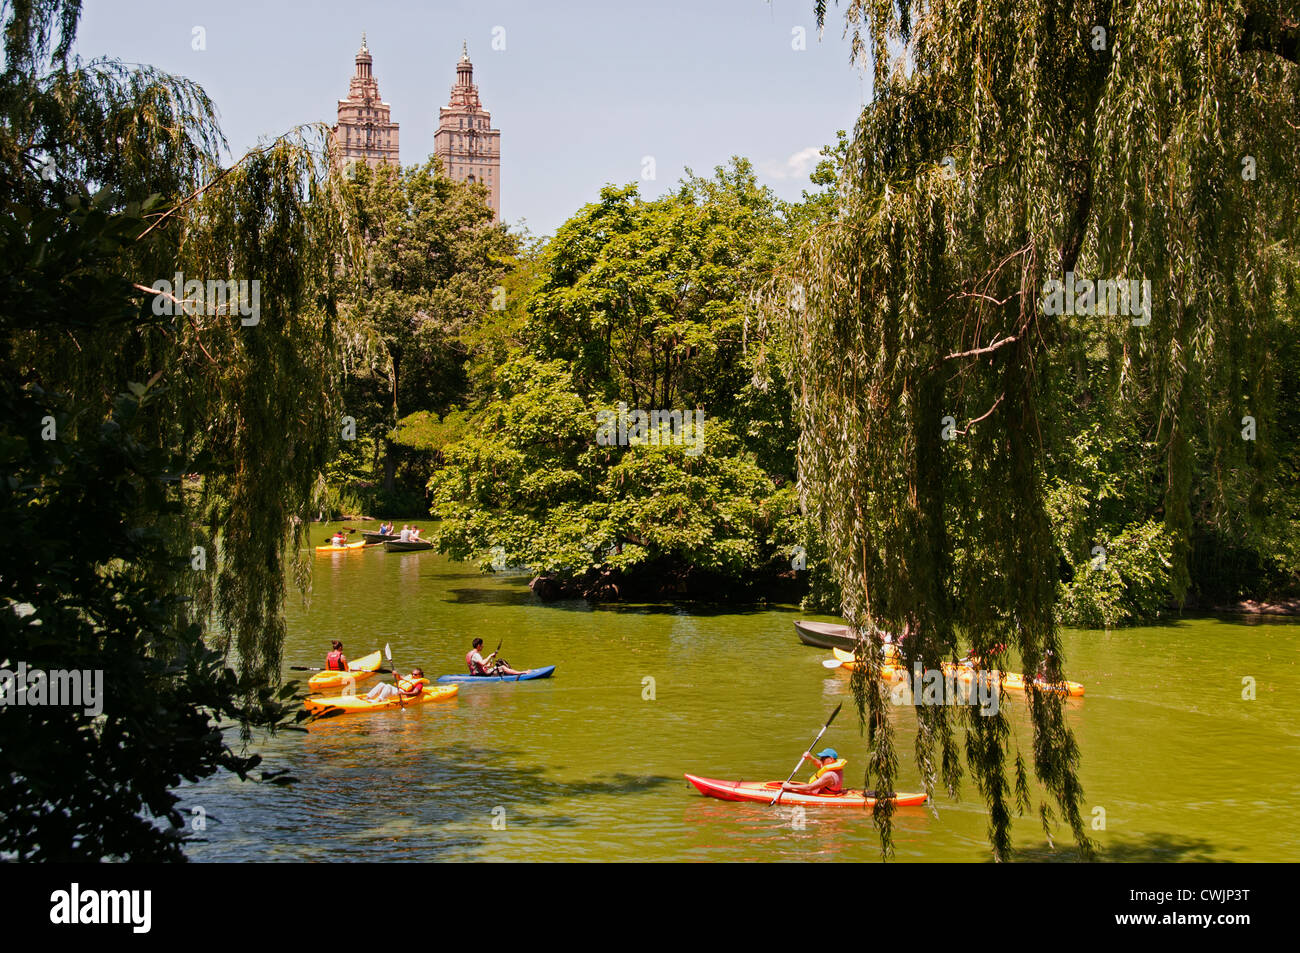 Lake Central Park New York City background Upper West Side Manhattan United States Stock Photo